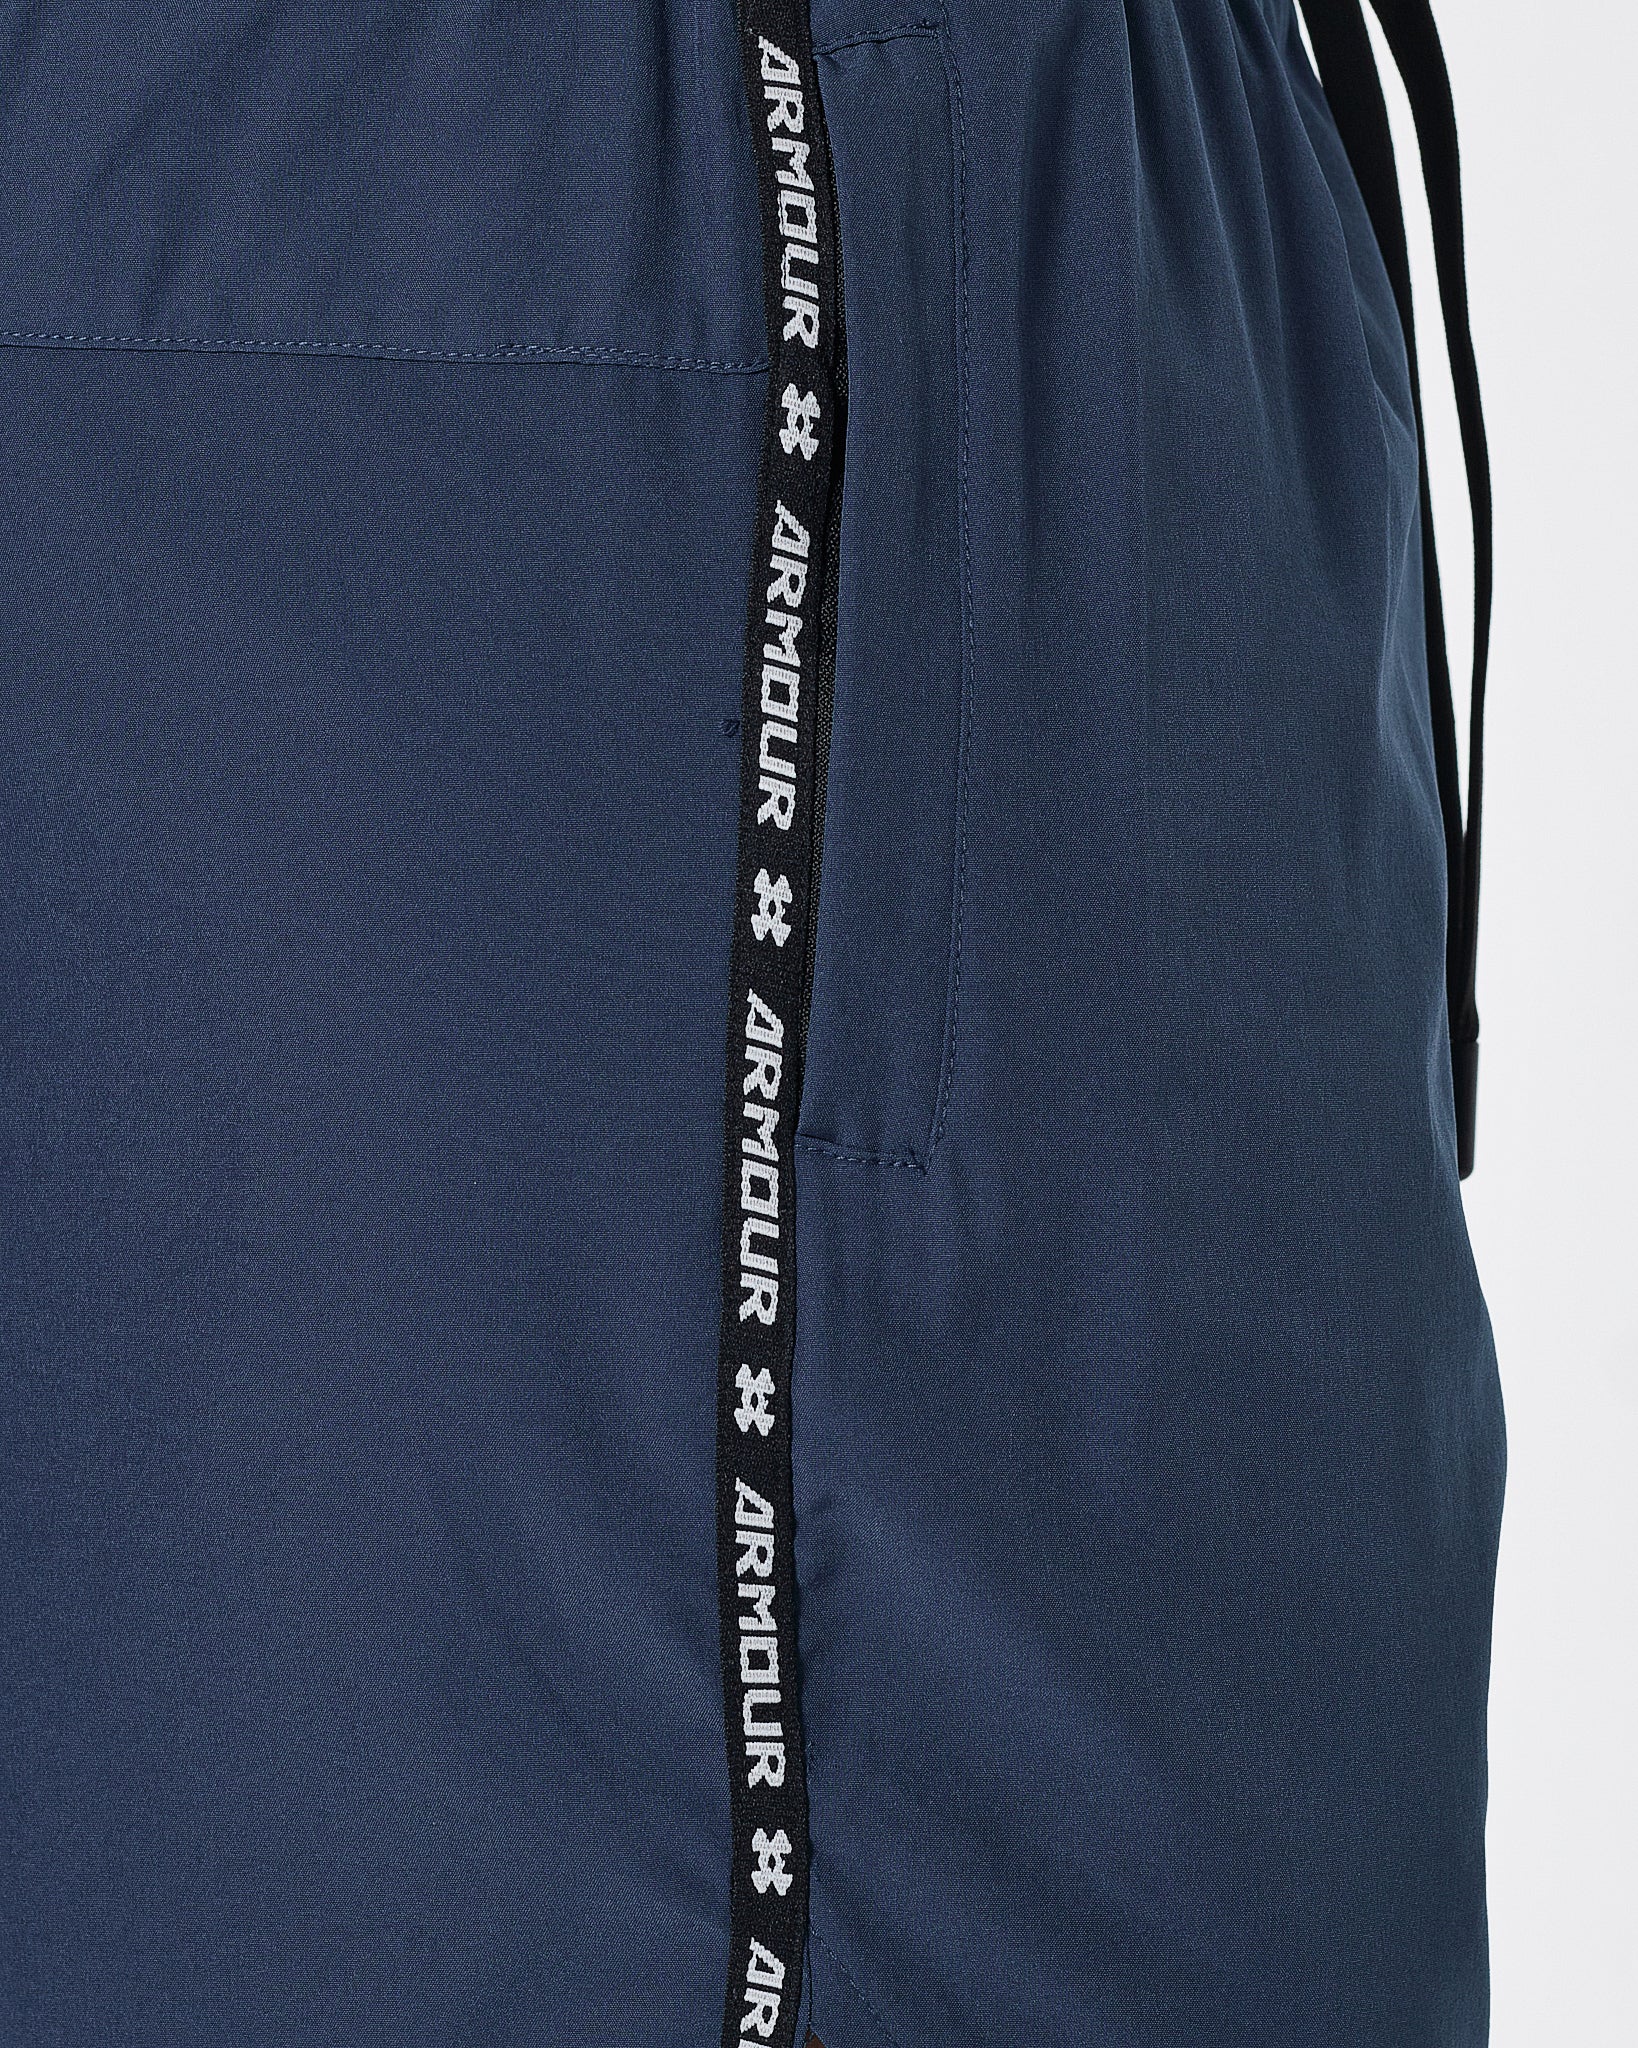 UA Logo Vertical Striped Men Blue Track Shorts 12.90